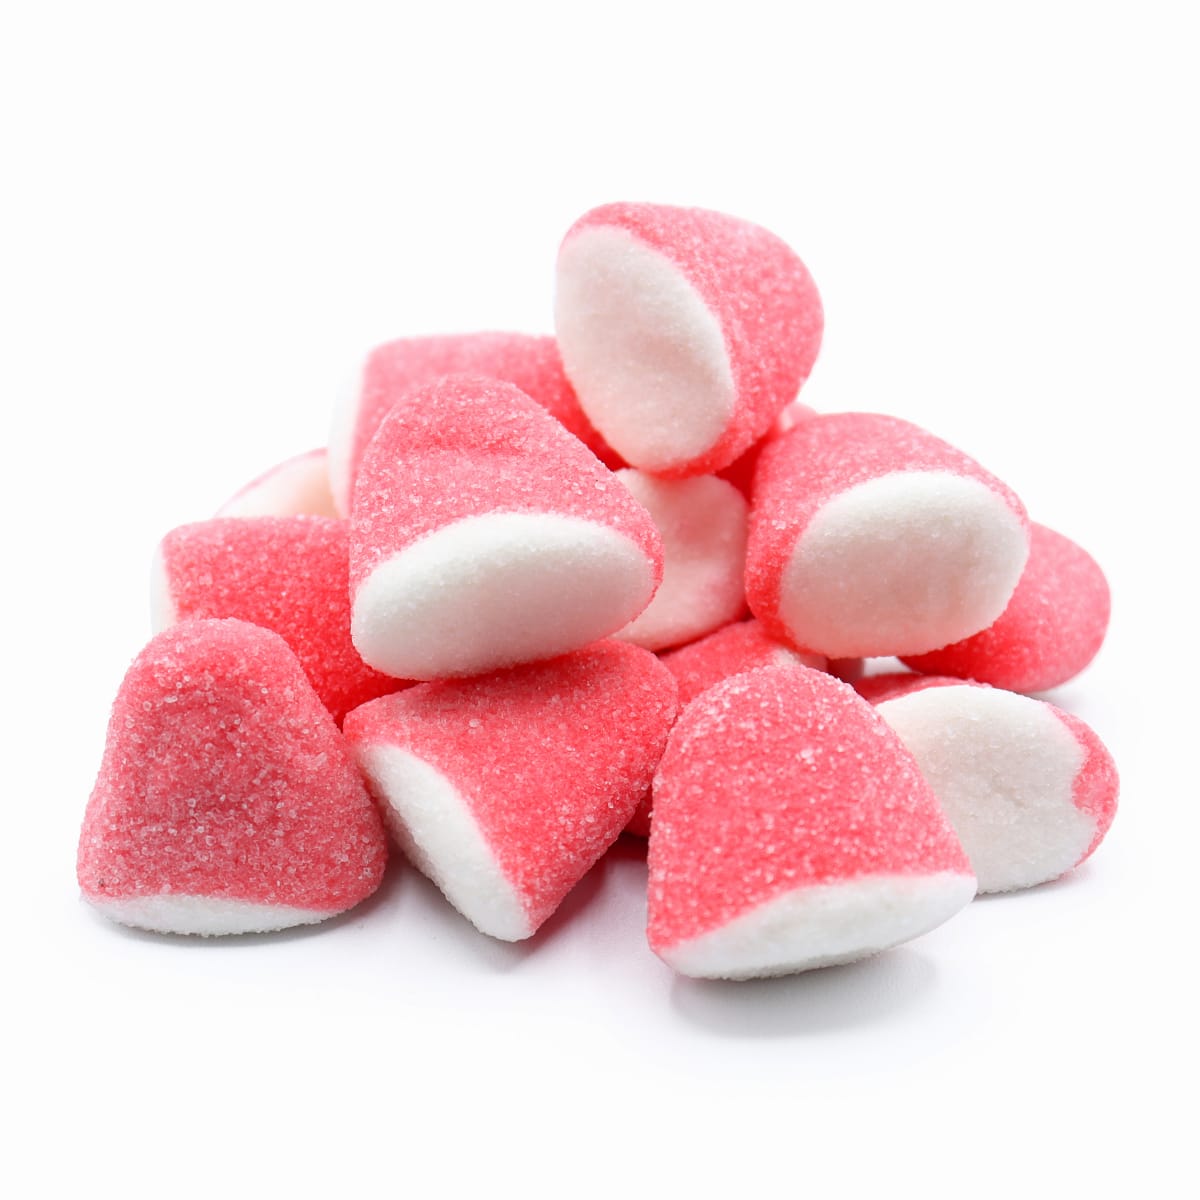 Strawberry Gummi Drops, Nostalgic Candy